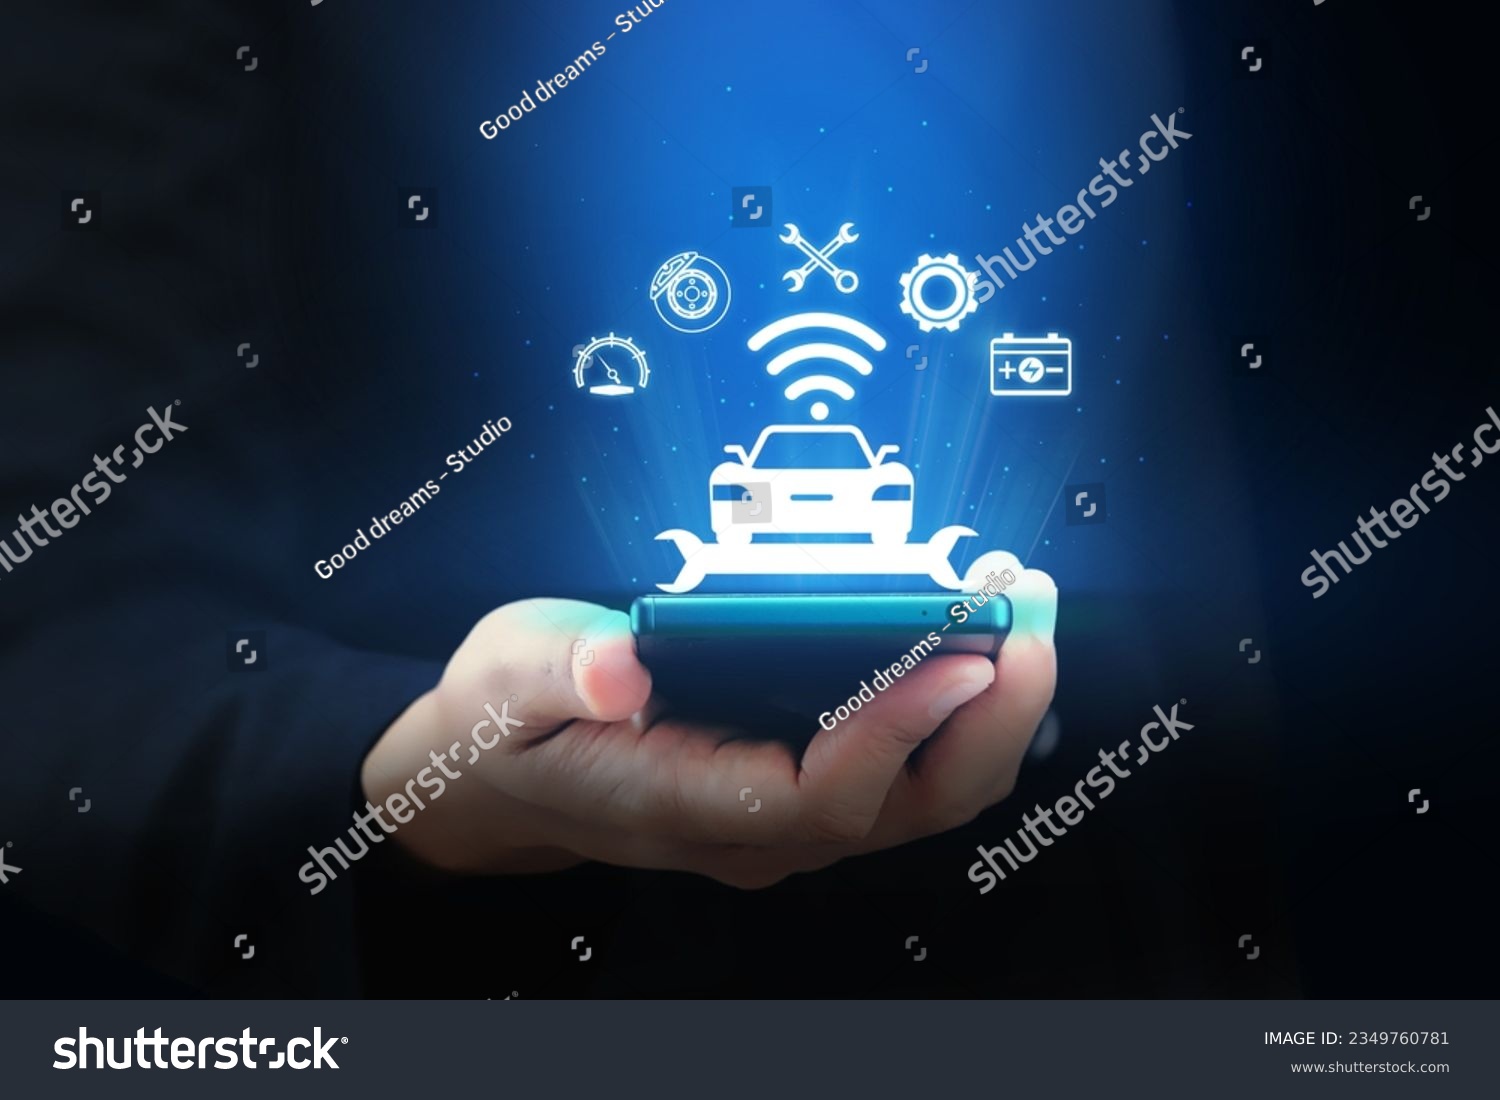 Intelligent car app on smartphone concept, Car app connect, a smart car companion, conveys the idea of an intelligent mobile app for cars. Car service app alert. #2349760781